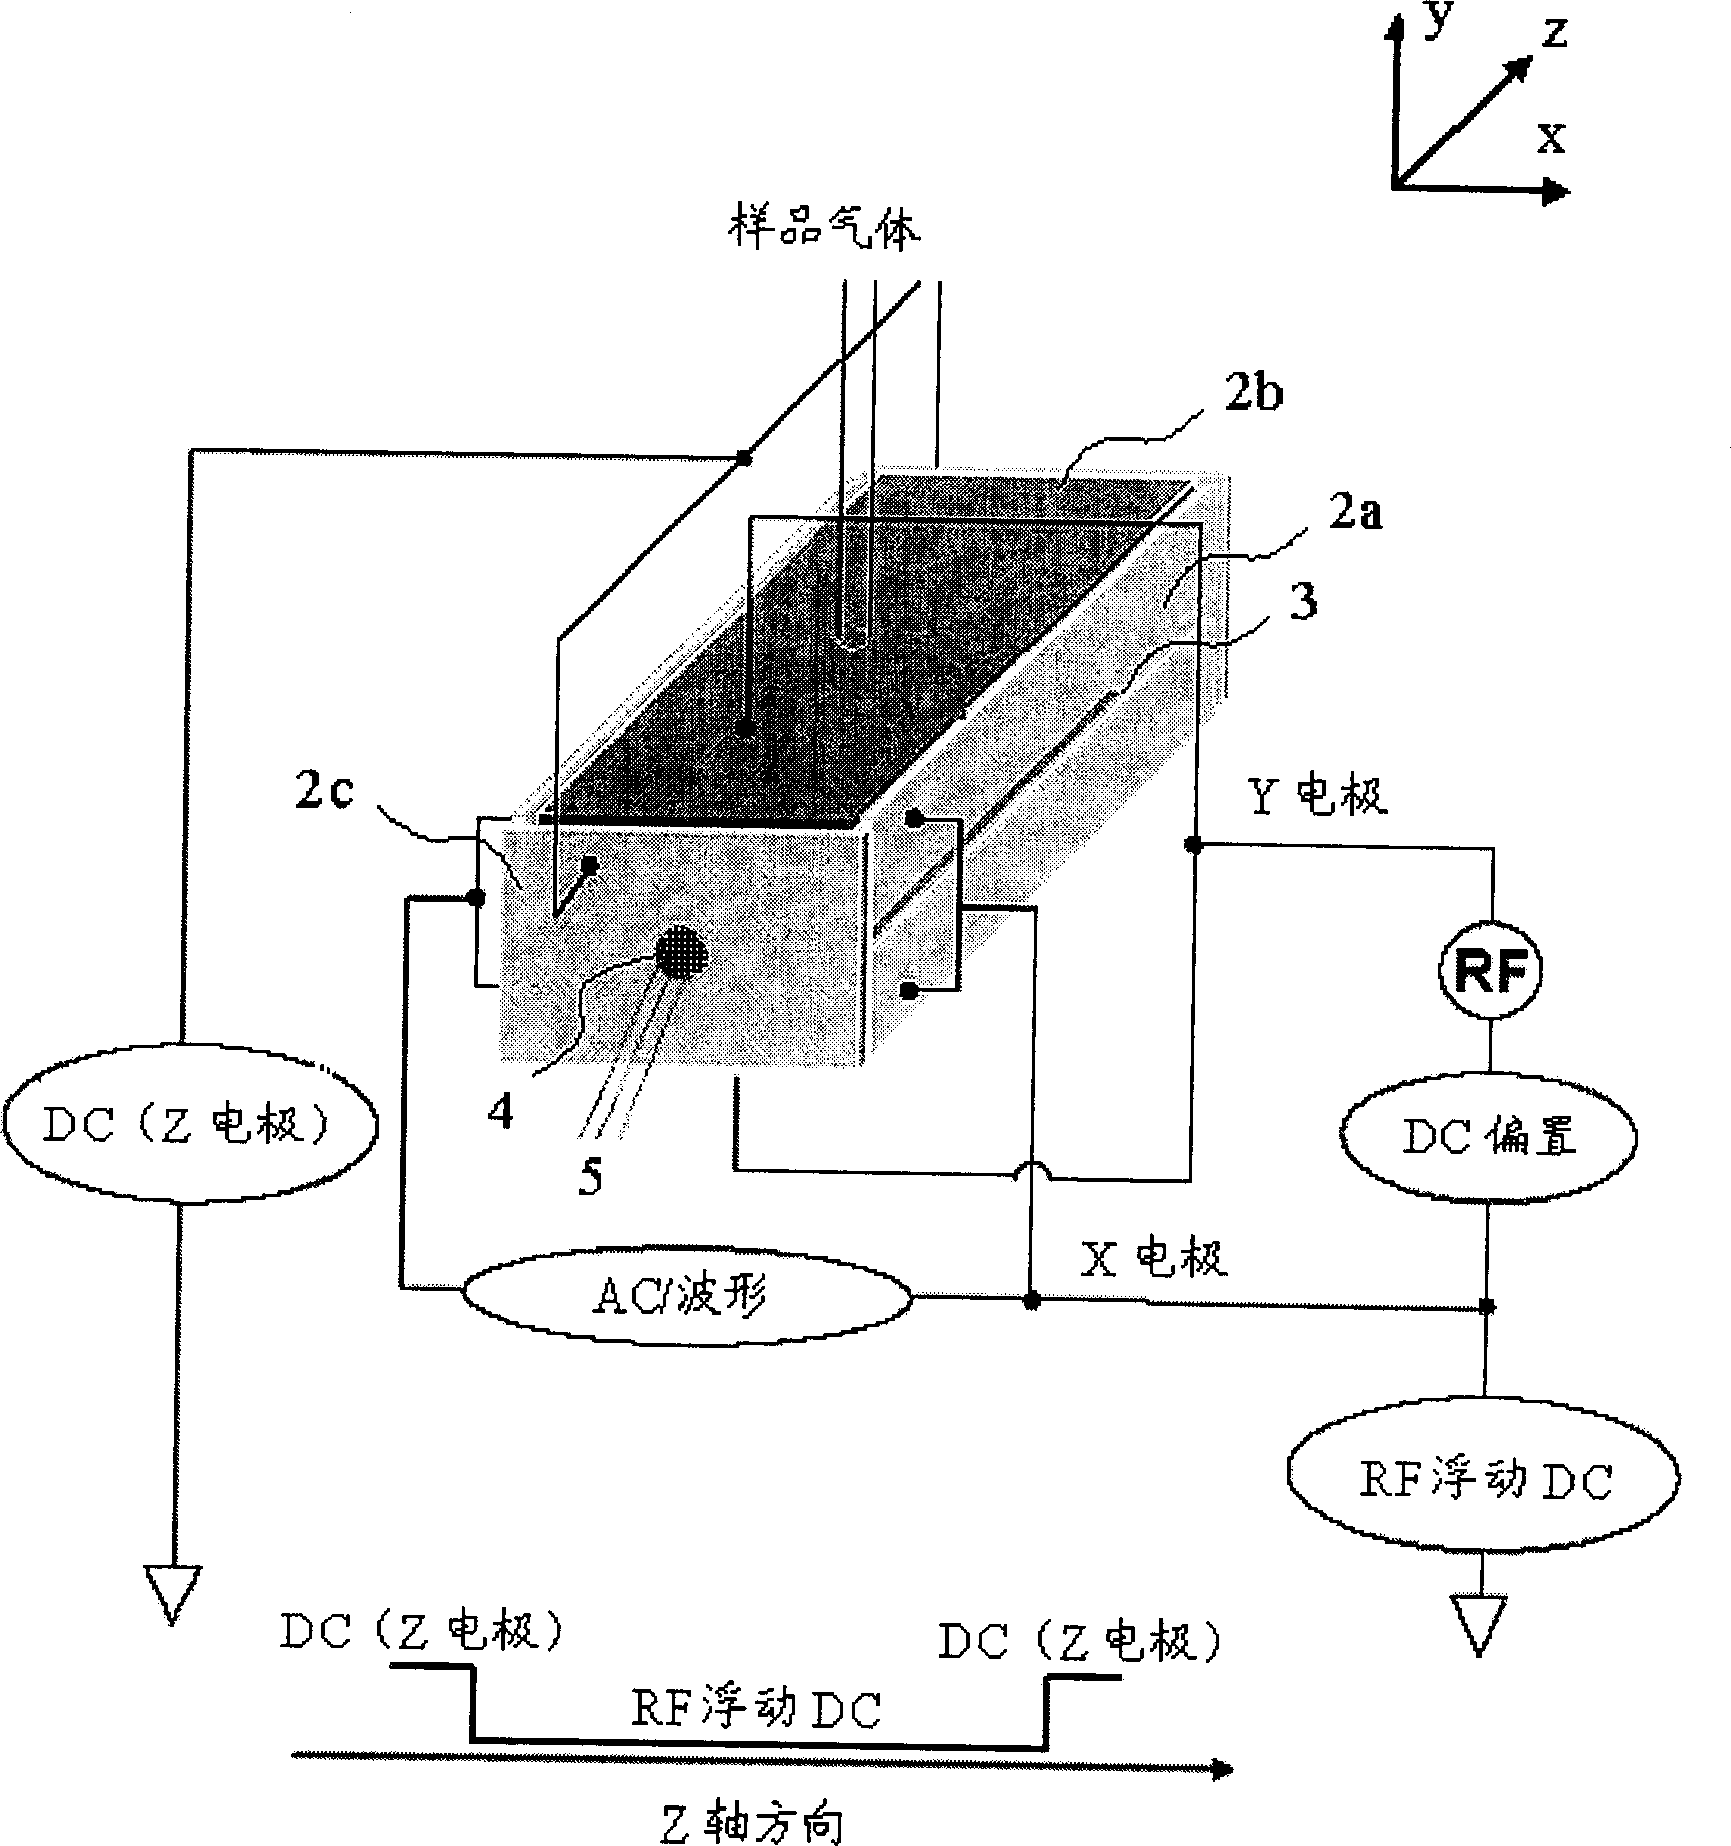 Internal photo ionization ion trap quality analyzer and method thereof